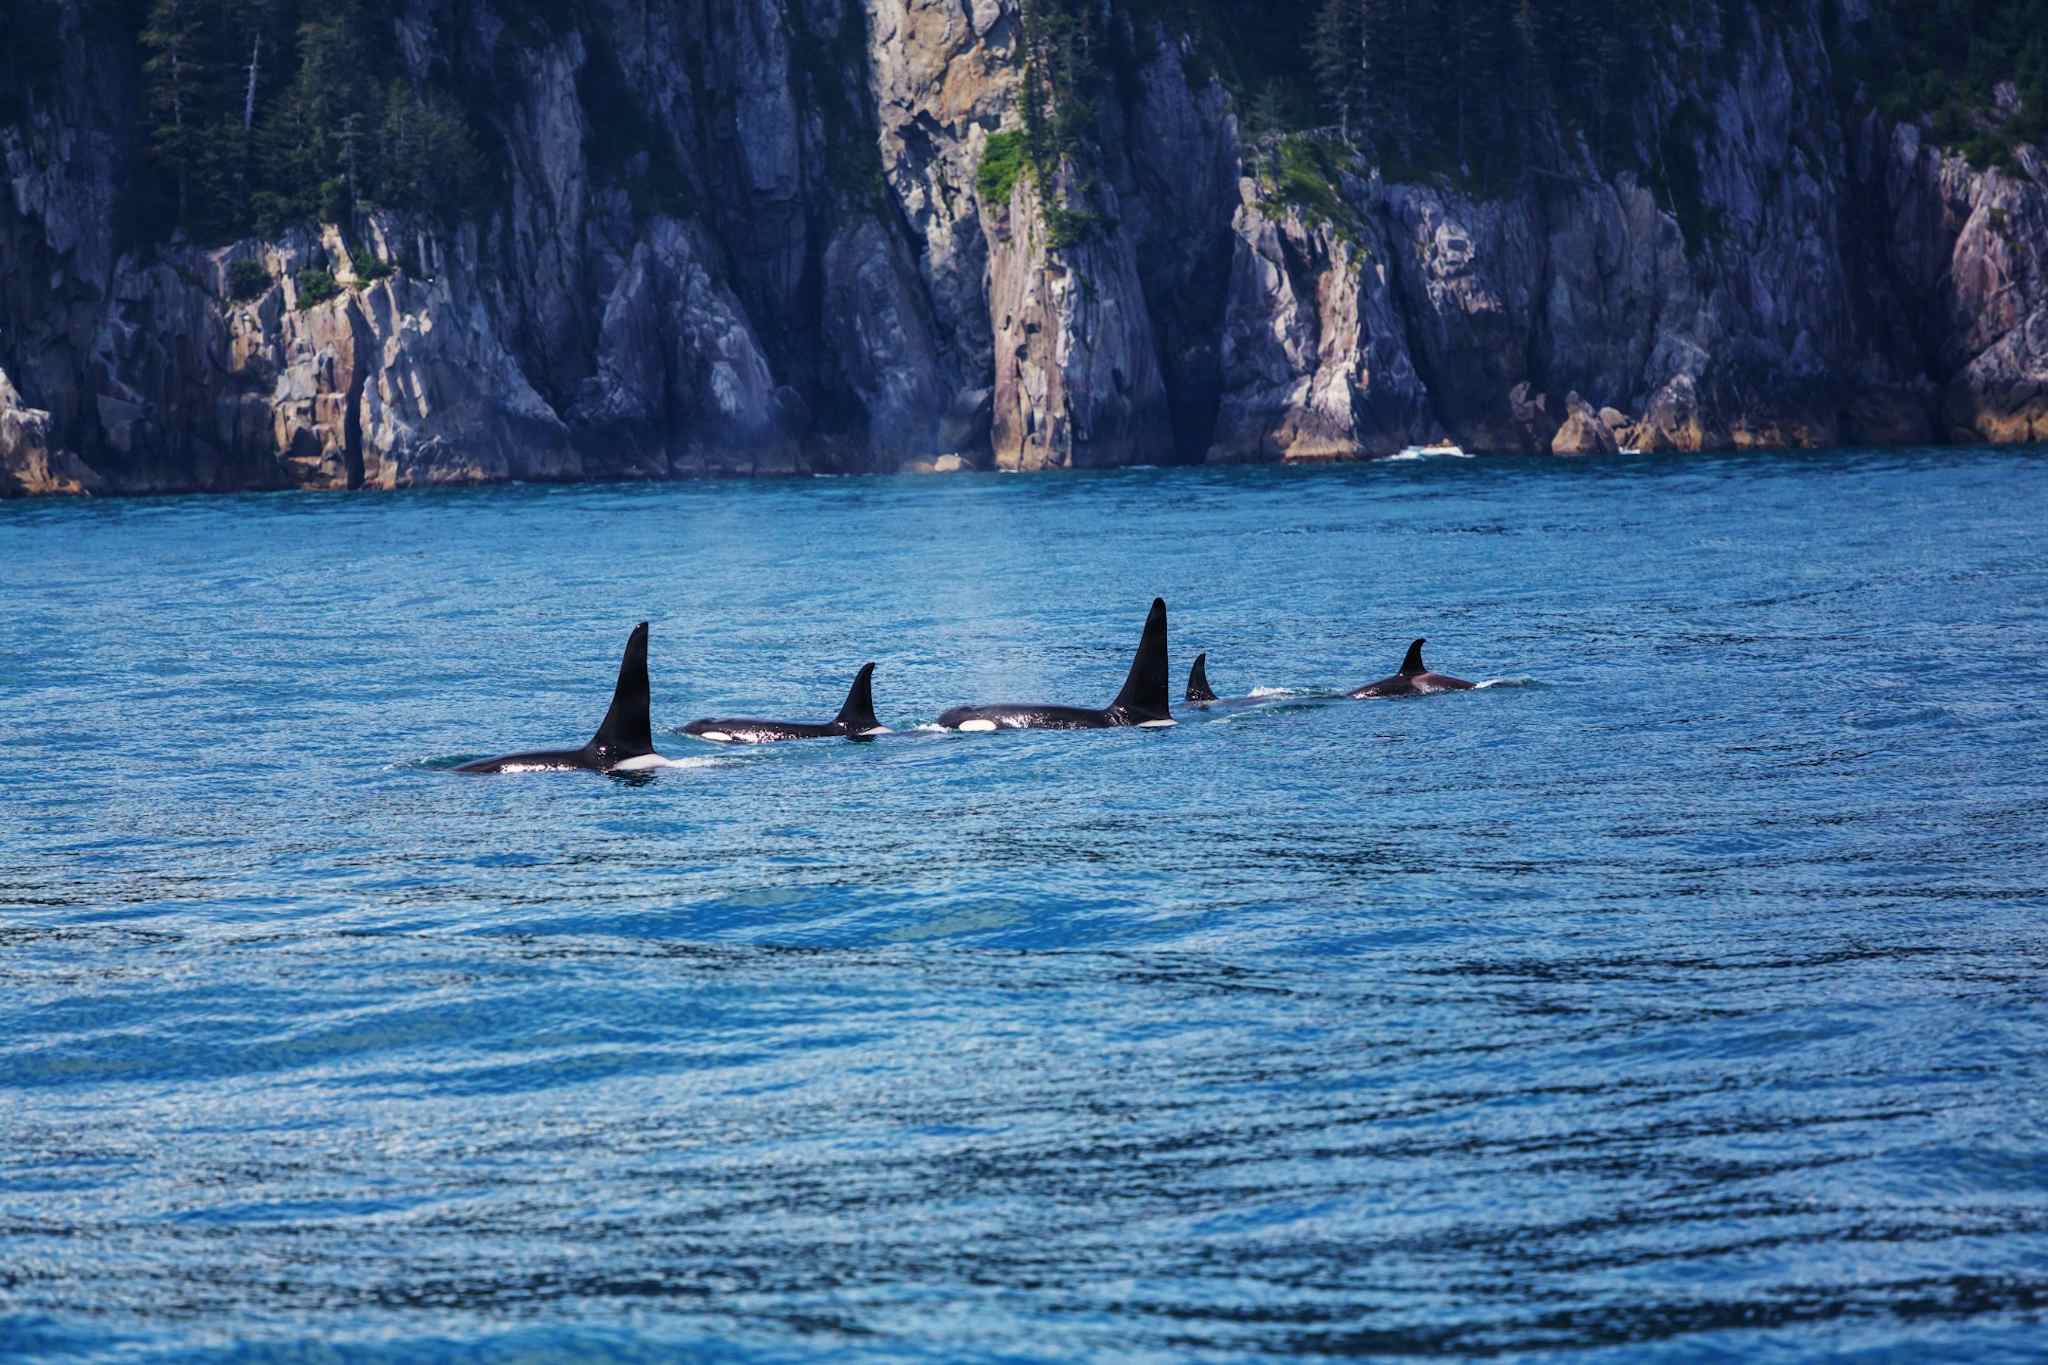 Orca, Alaska, USA
https://www.canva.com/photos/MAB3cTbn60M-orca/